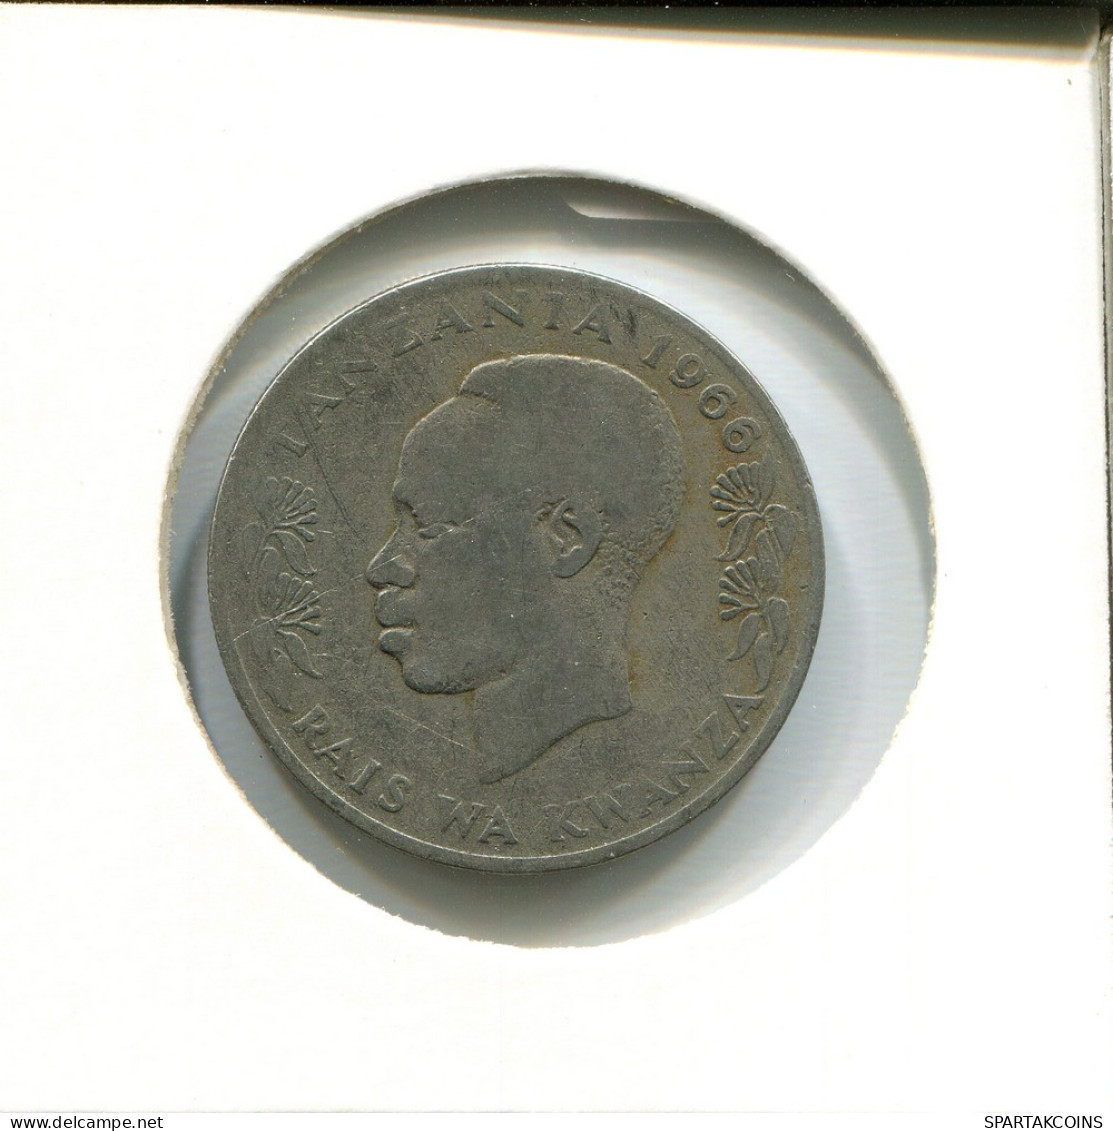 1 SHILLINGI 1966 TANZANIA Coin #AT975.U - Tanzania